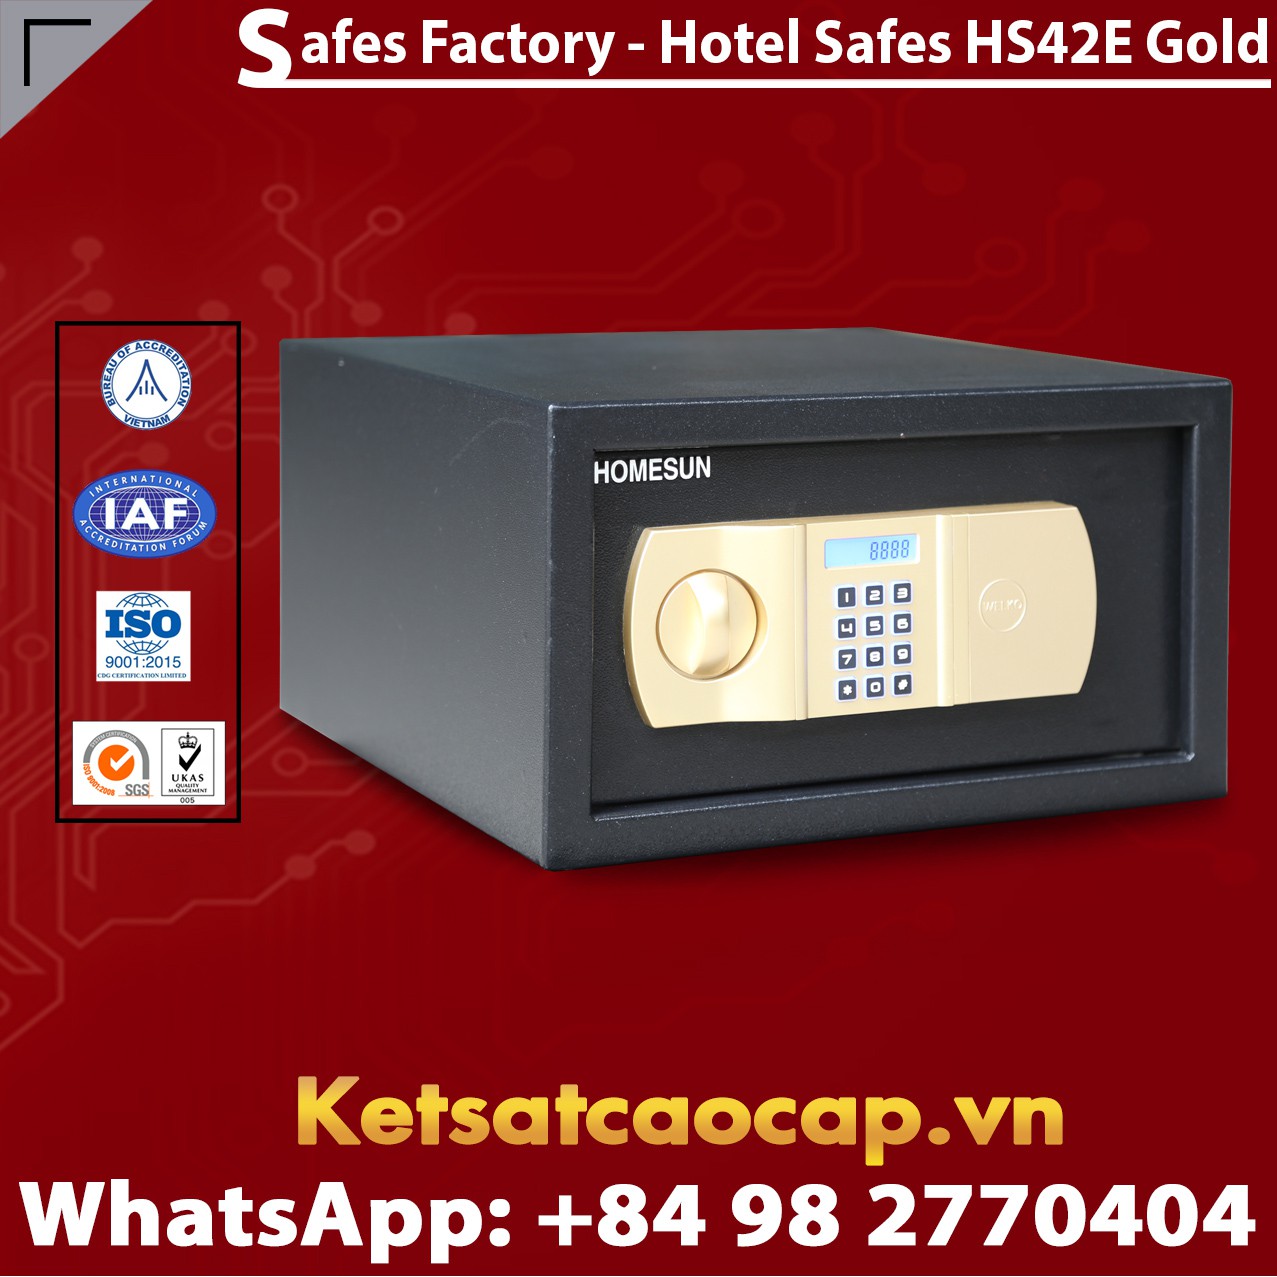 Best Hotel Safe For Home HOMESUN HS42 E Gold